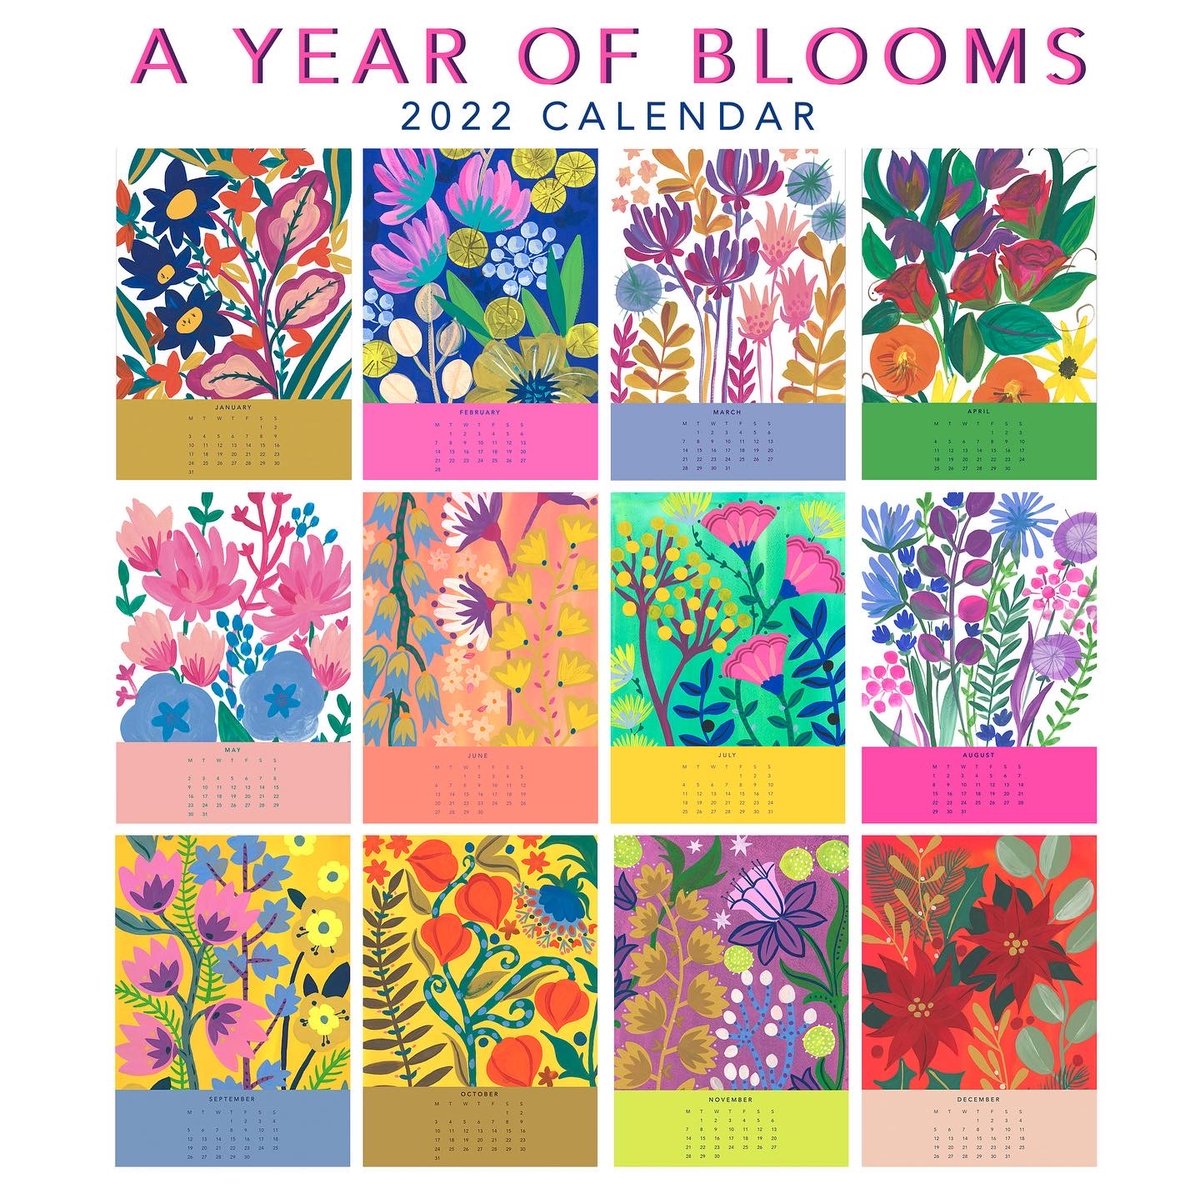 A year of blooms 2022 calendar 